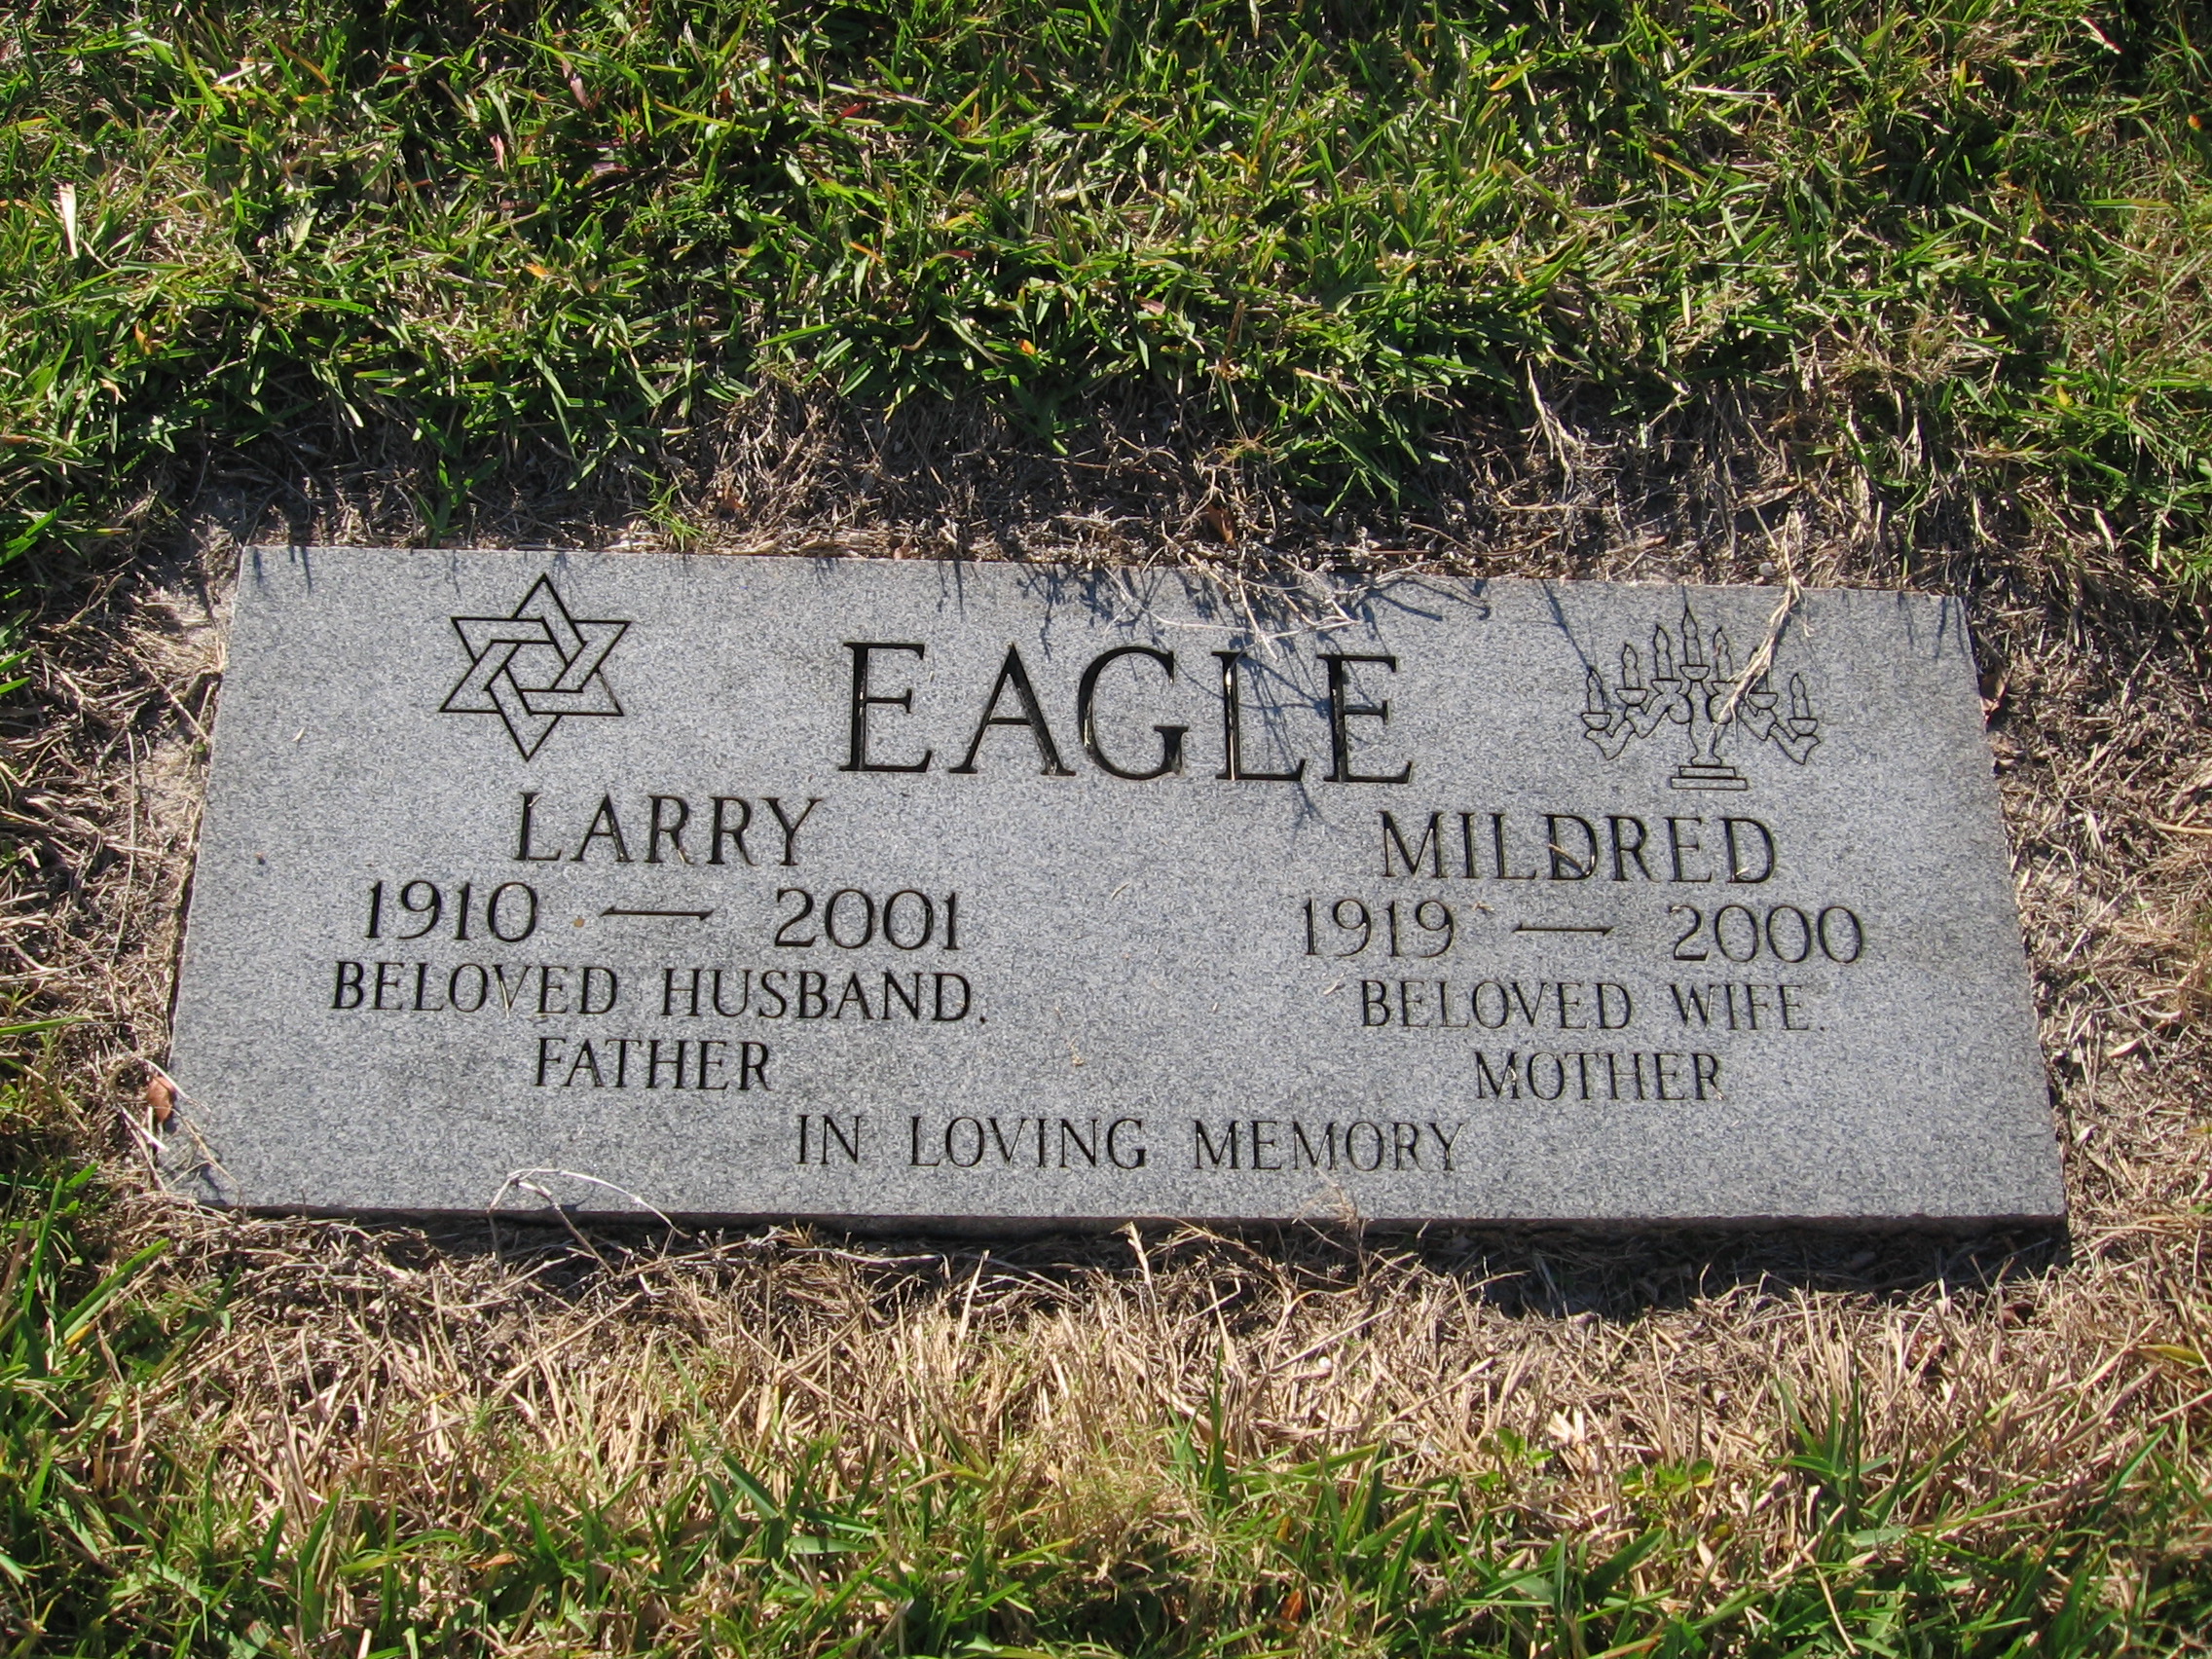 Larry Eagle